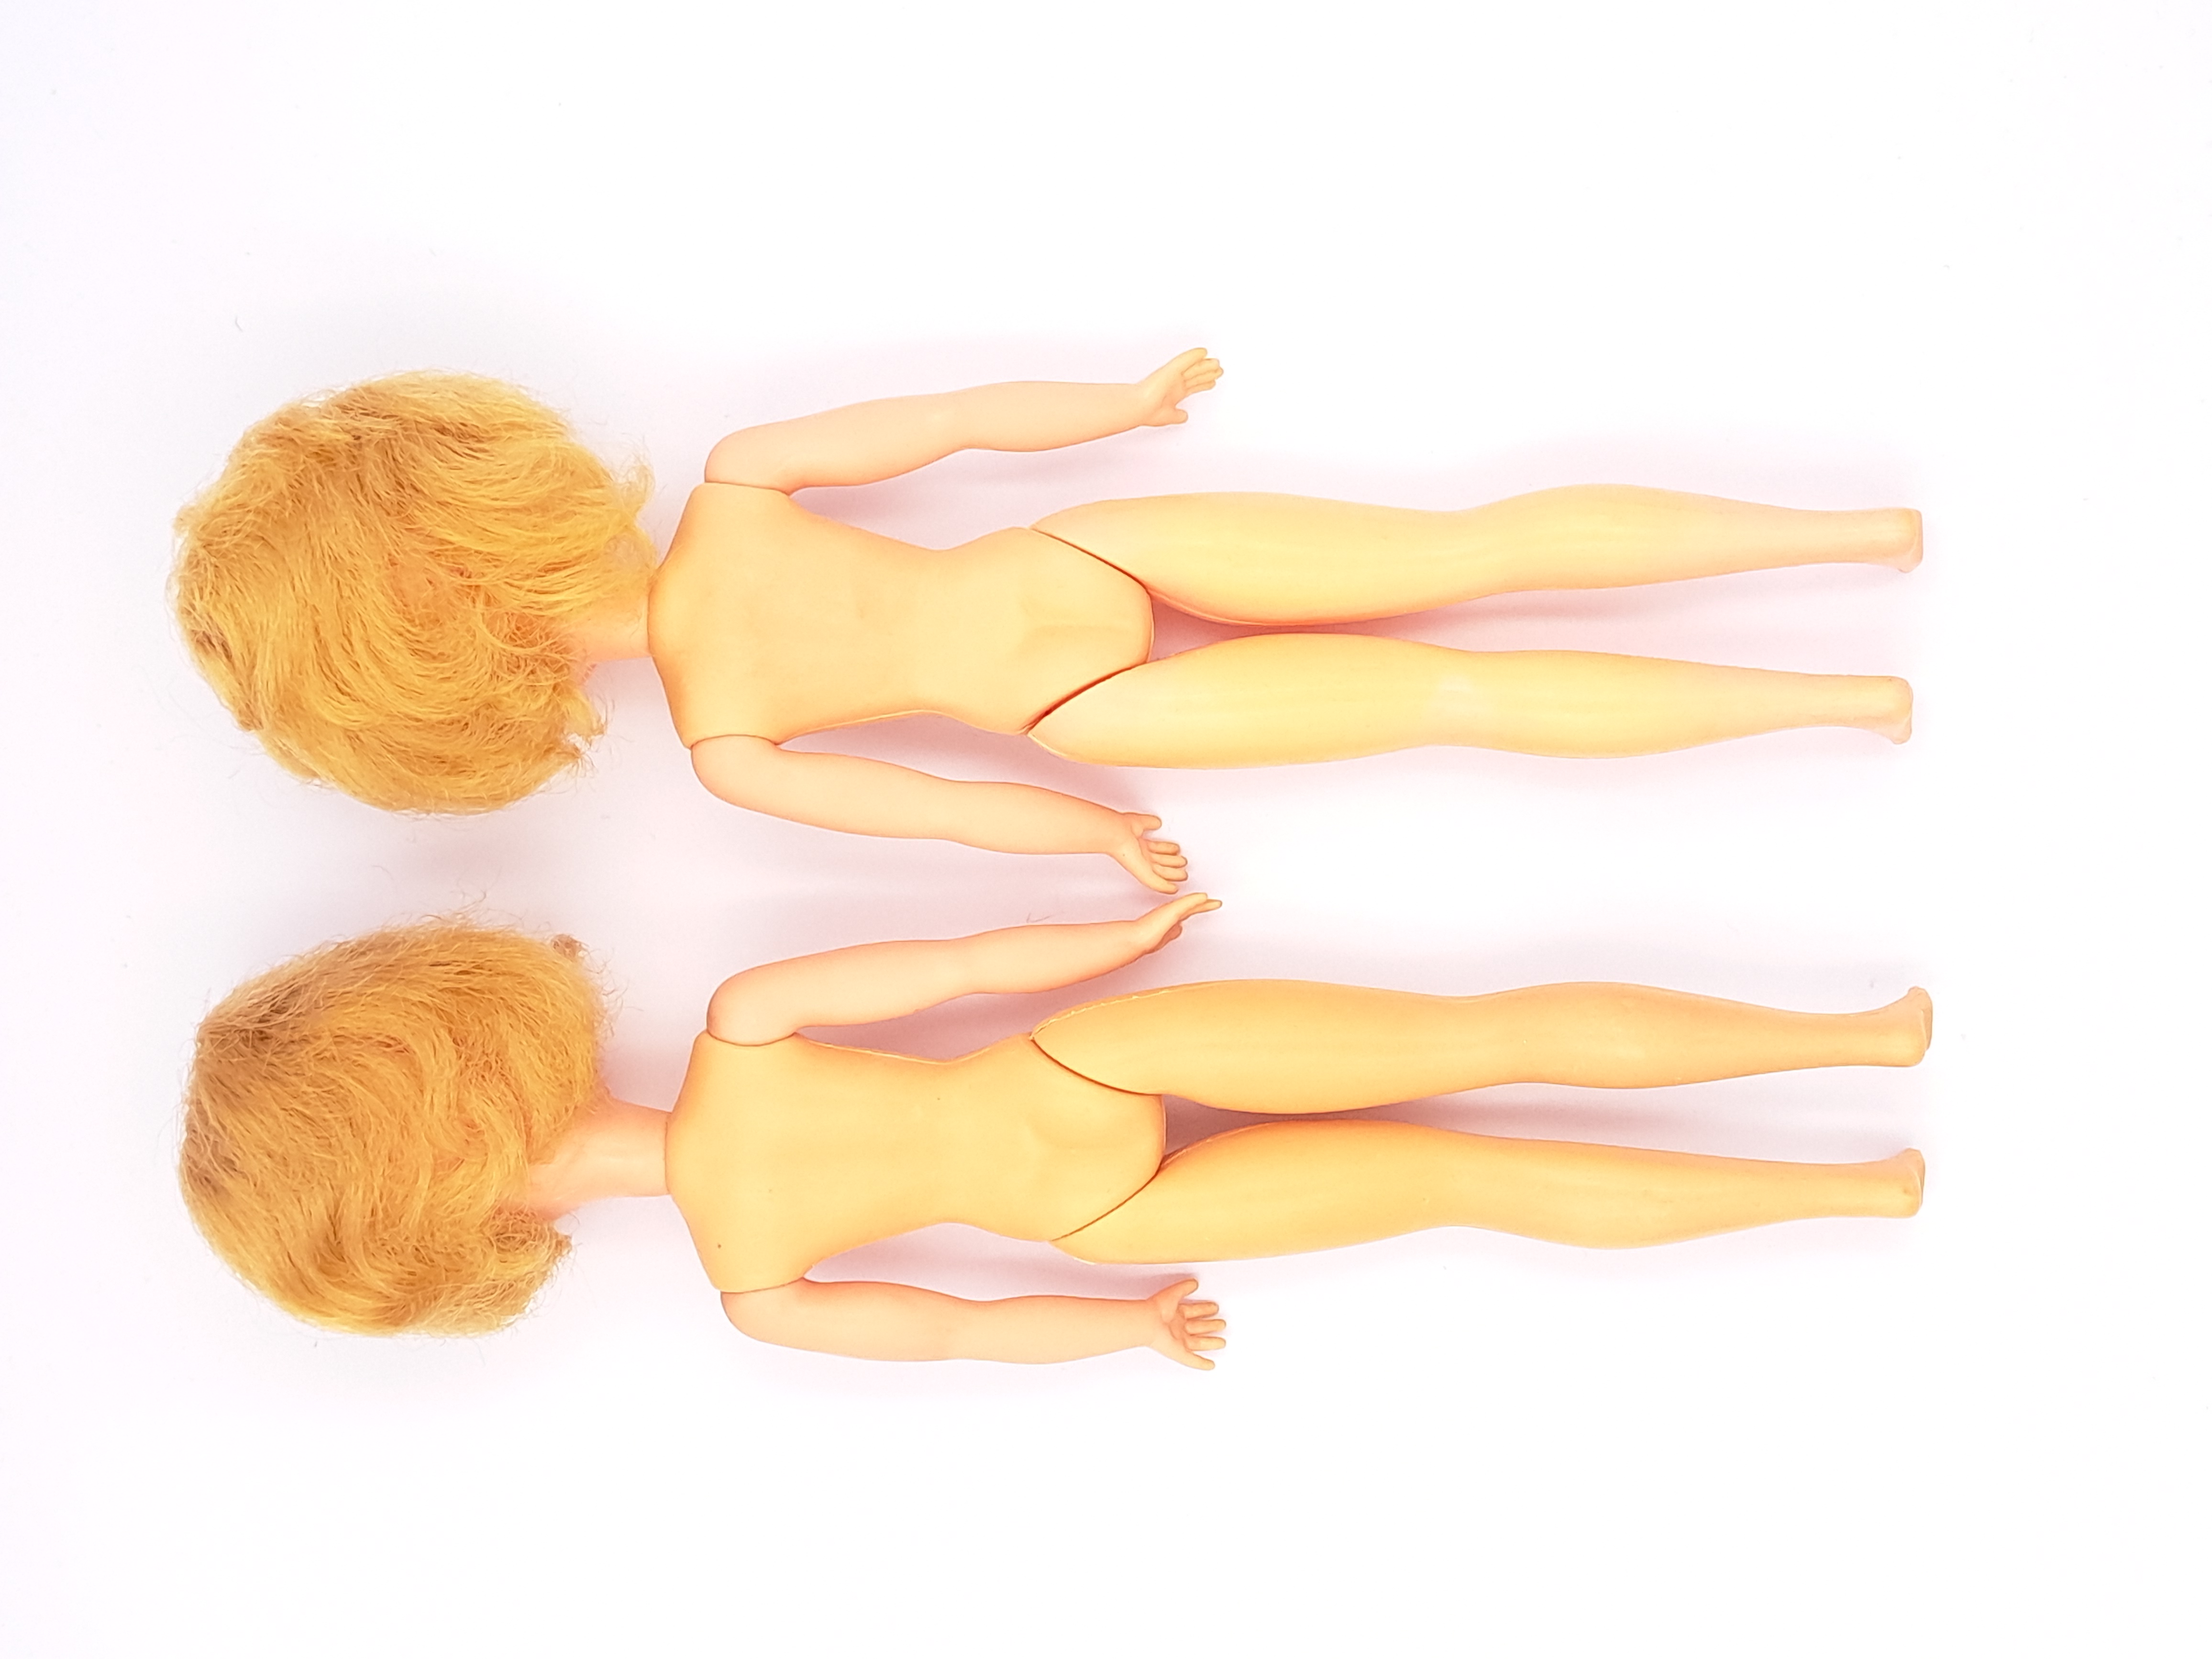 Pedigree Sindy pair of vintage dolls, blonde, 1963 - Image 4 of 4